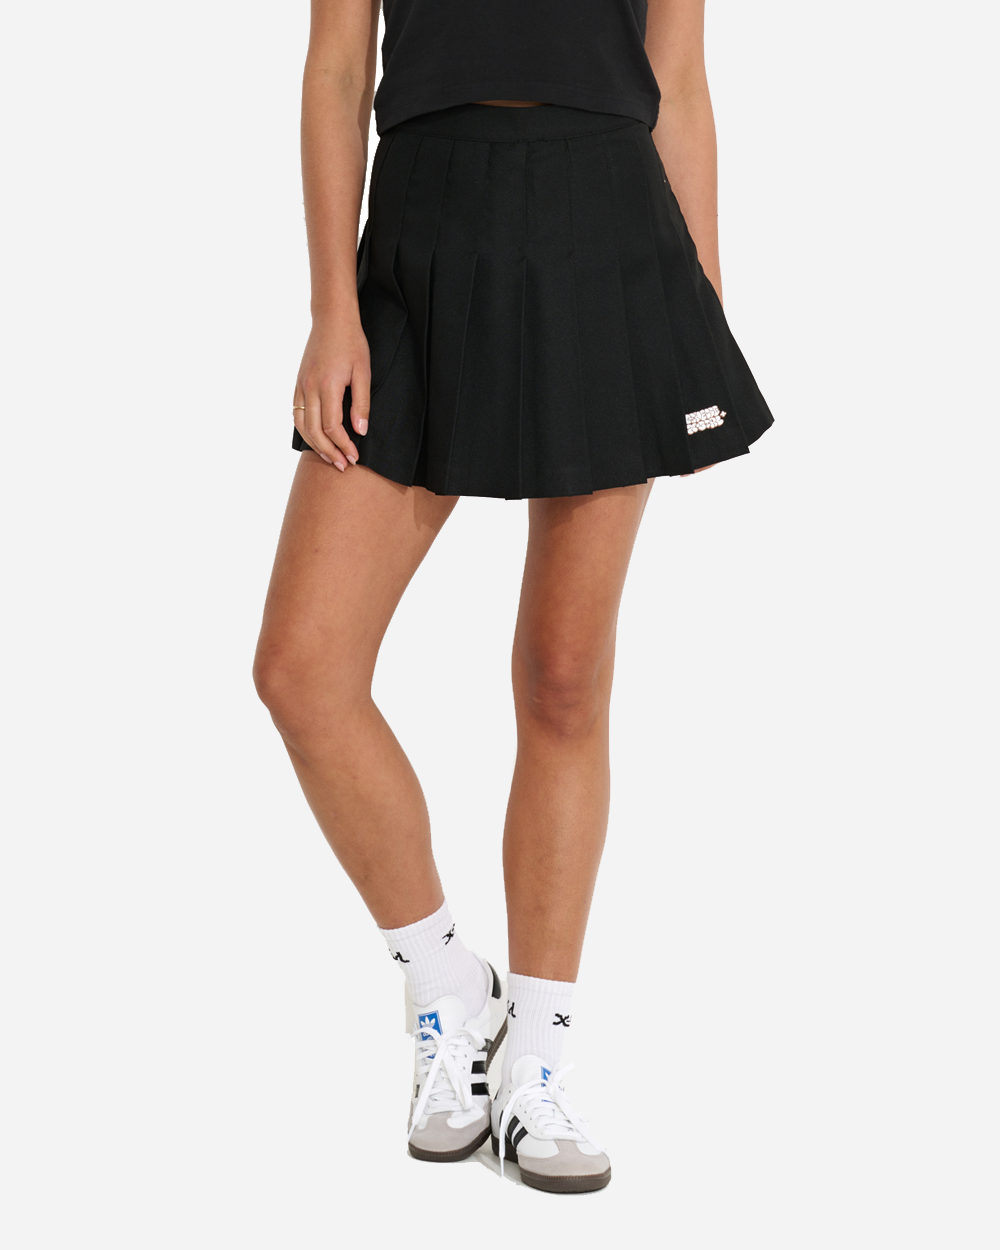 Finesse x X-Girl Tennis Skirt Black RGB300-BLK